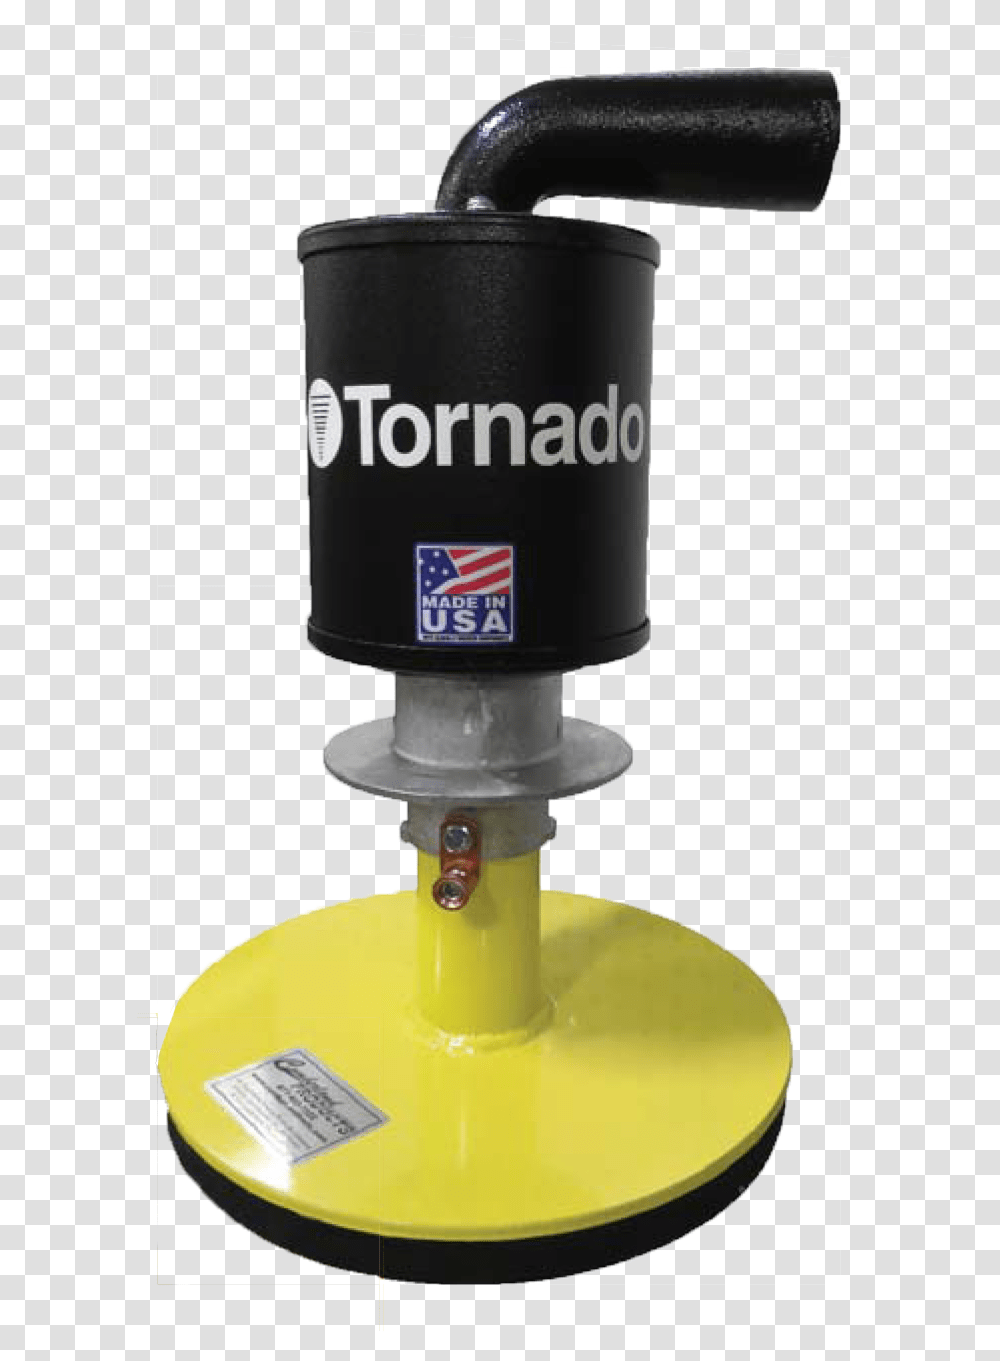 Cumberland Tools Gas Tornado Rubber Stamp, Machine, Mixer, Appliance, Cylinder Transparent Png